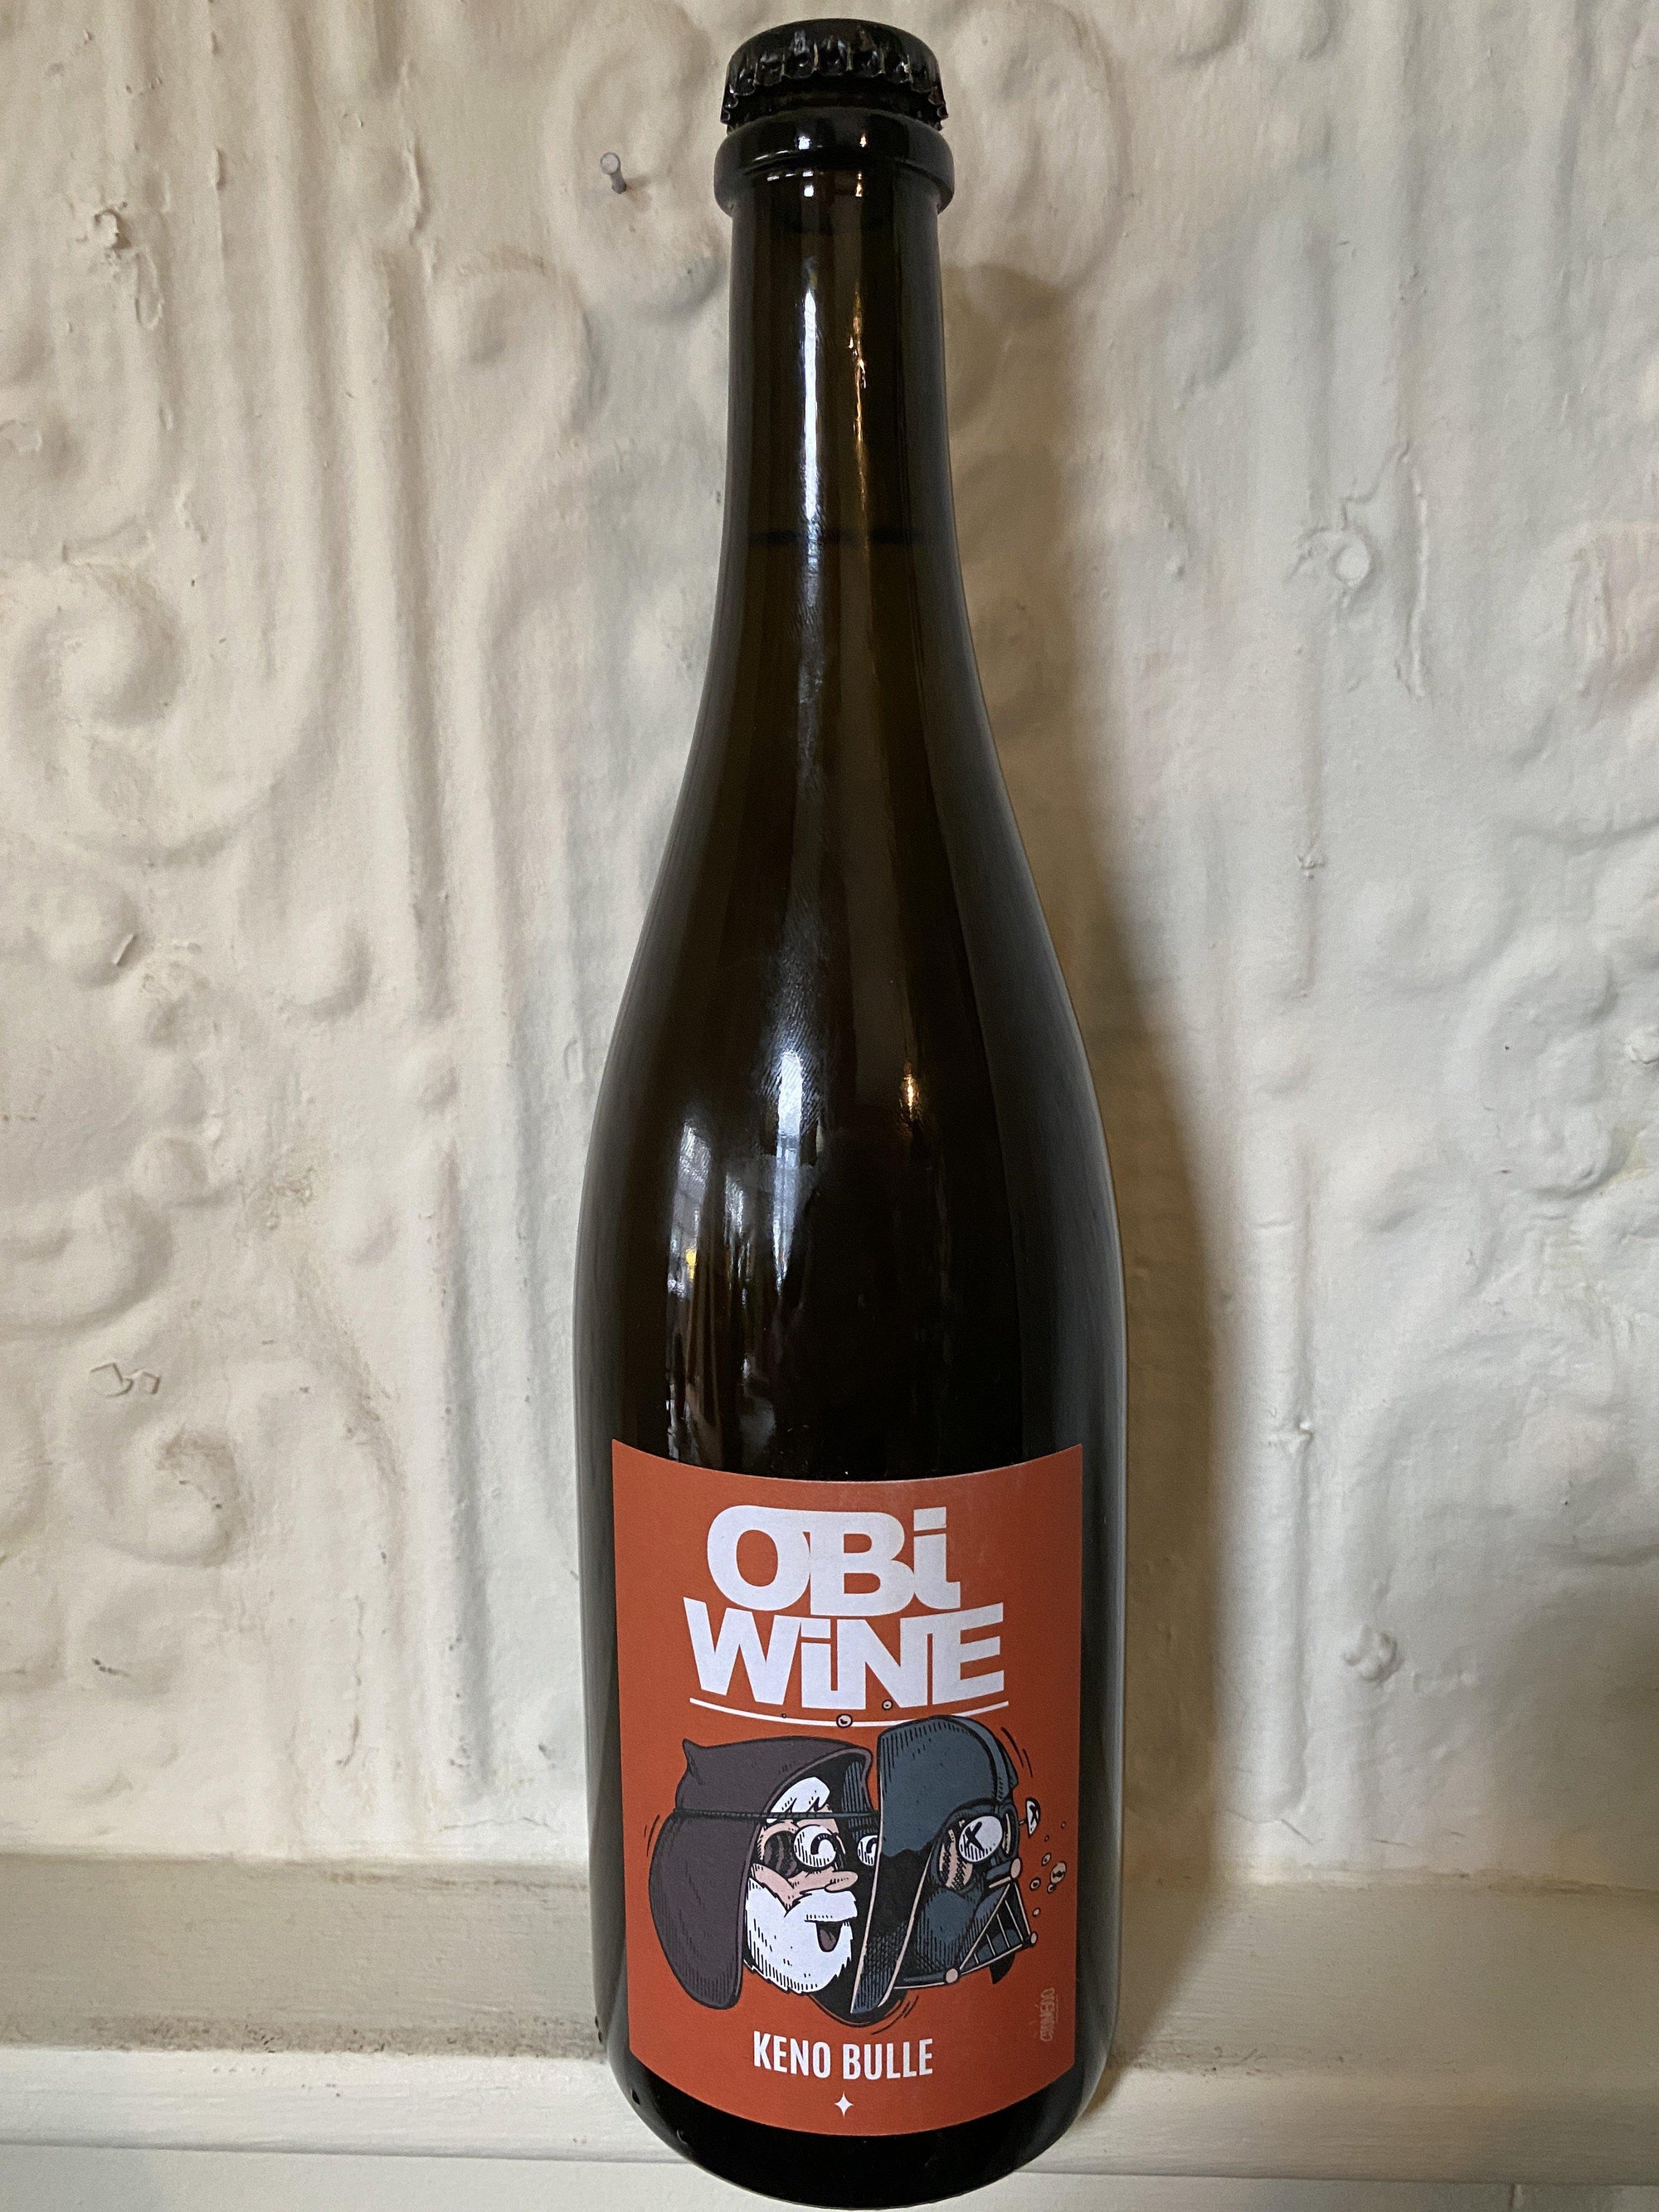 Obi Wine Keno Bulle, Domaine Geschickt 2019 (Alsace, France)-Wine-Bibber & Bell